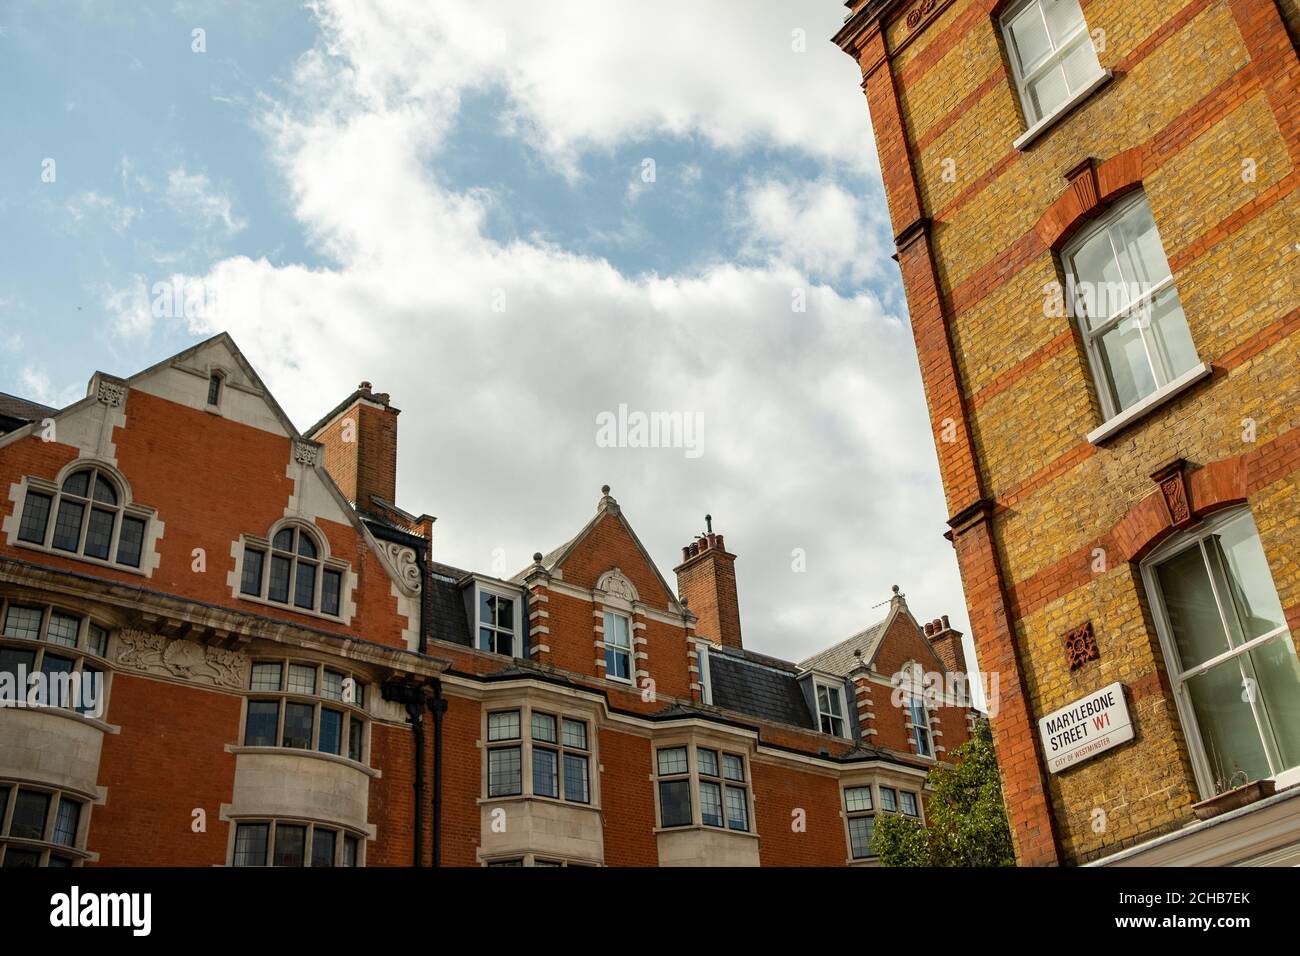 London - Luxury red brick mansion buildings in Marylebone Stock Photo